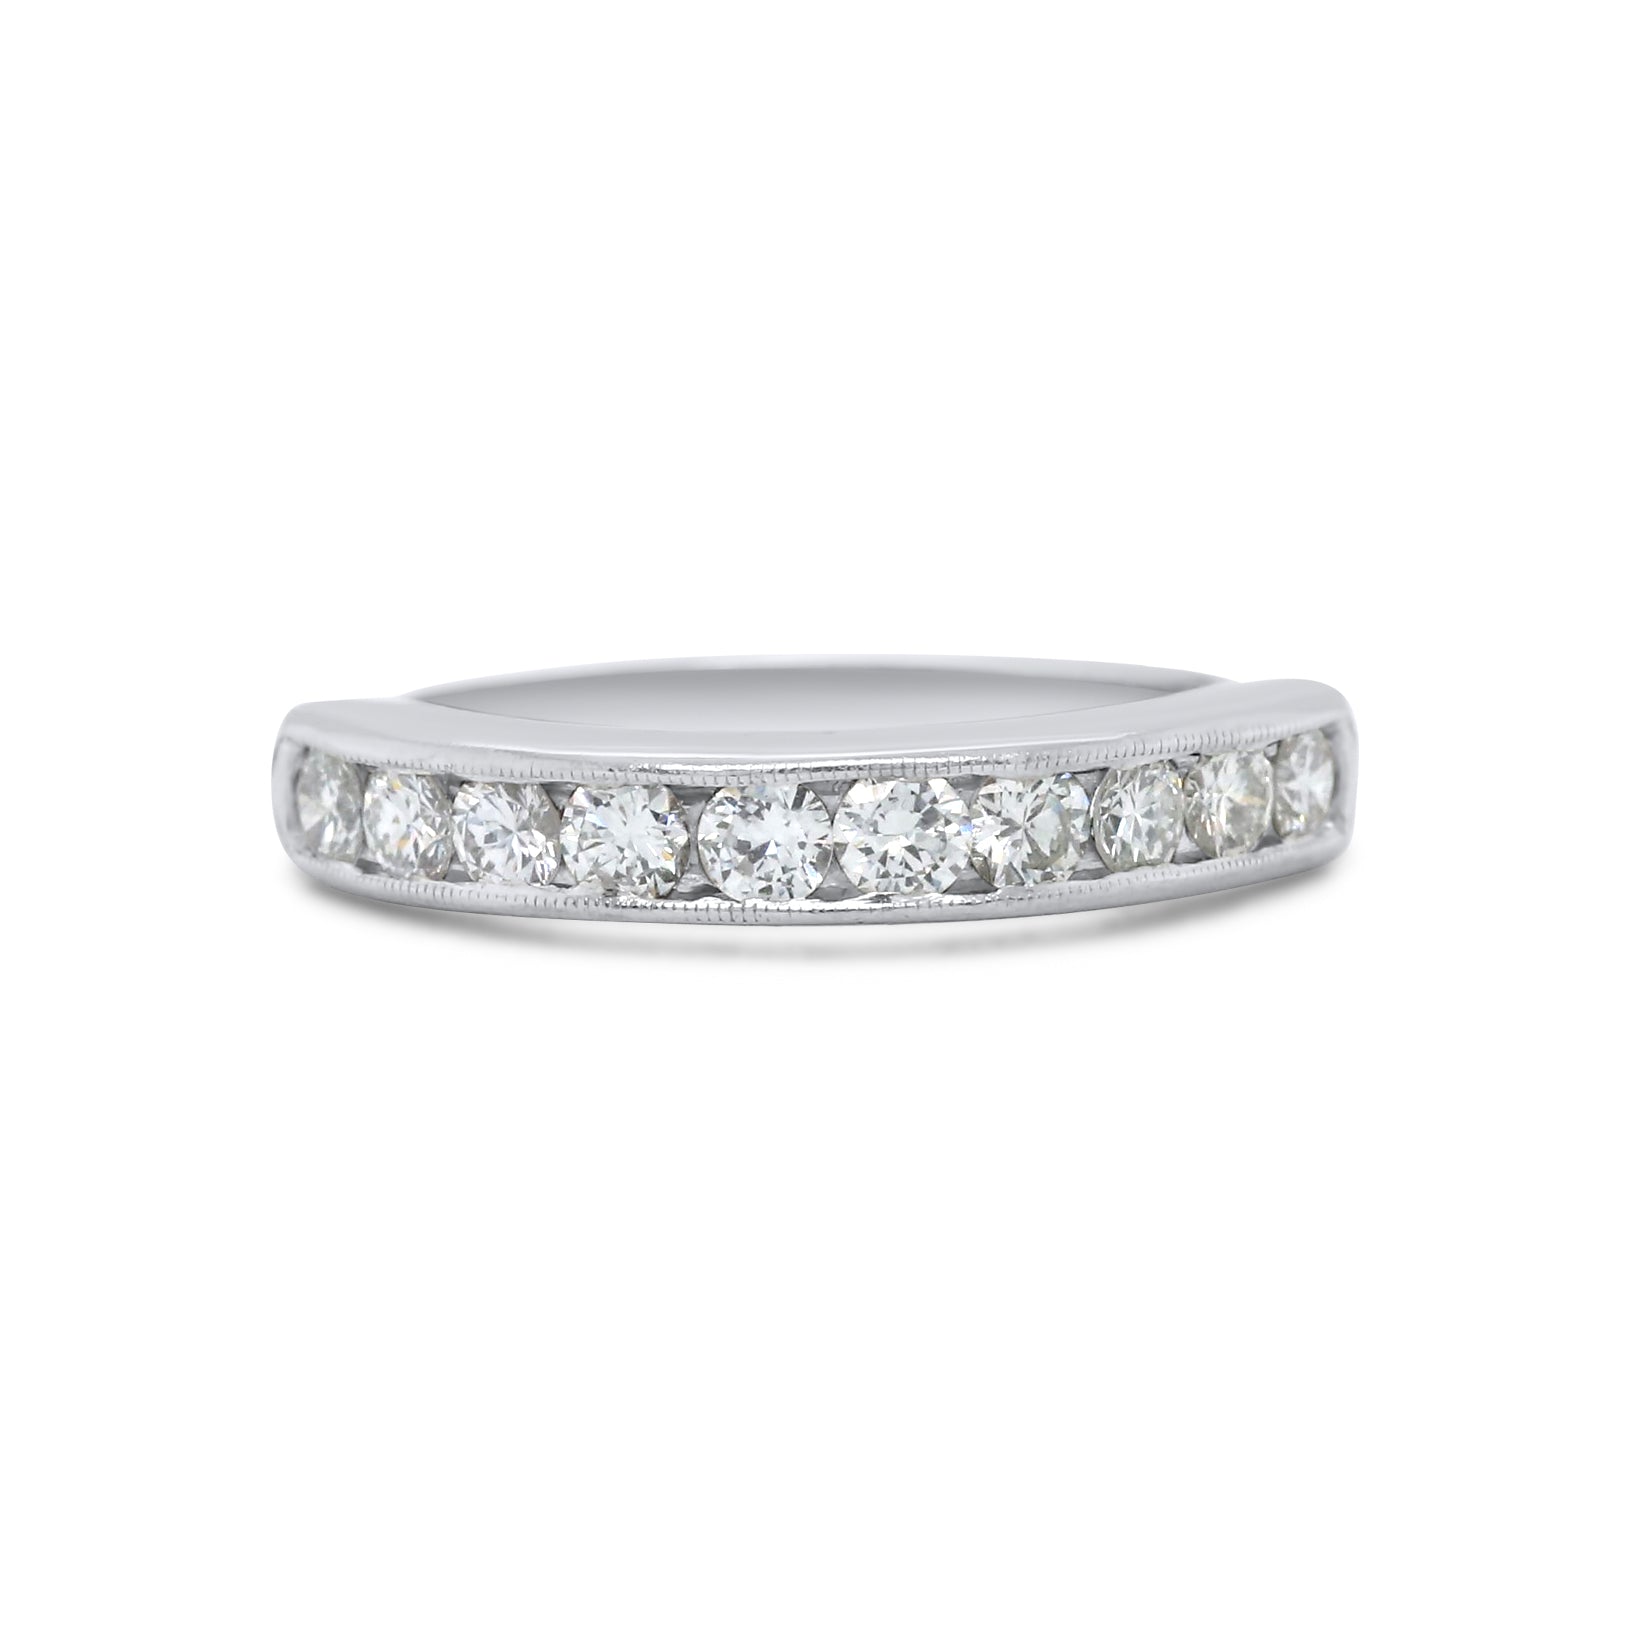 platinum 10 diamond channel set estate wedding band ring with milgrain detailing